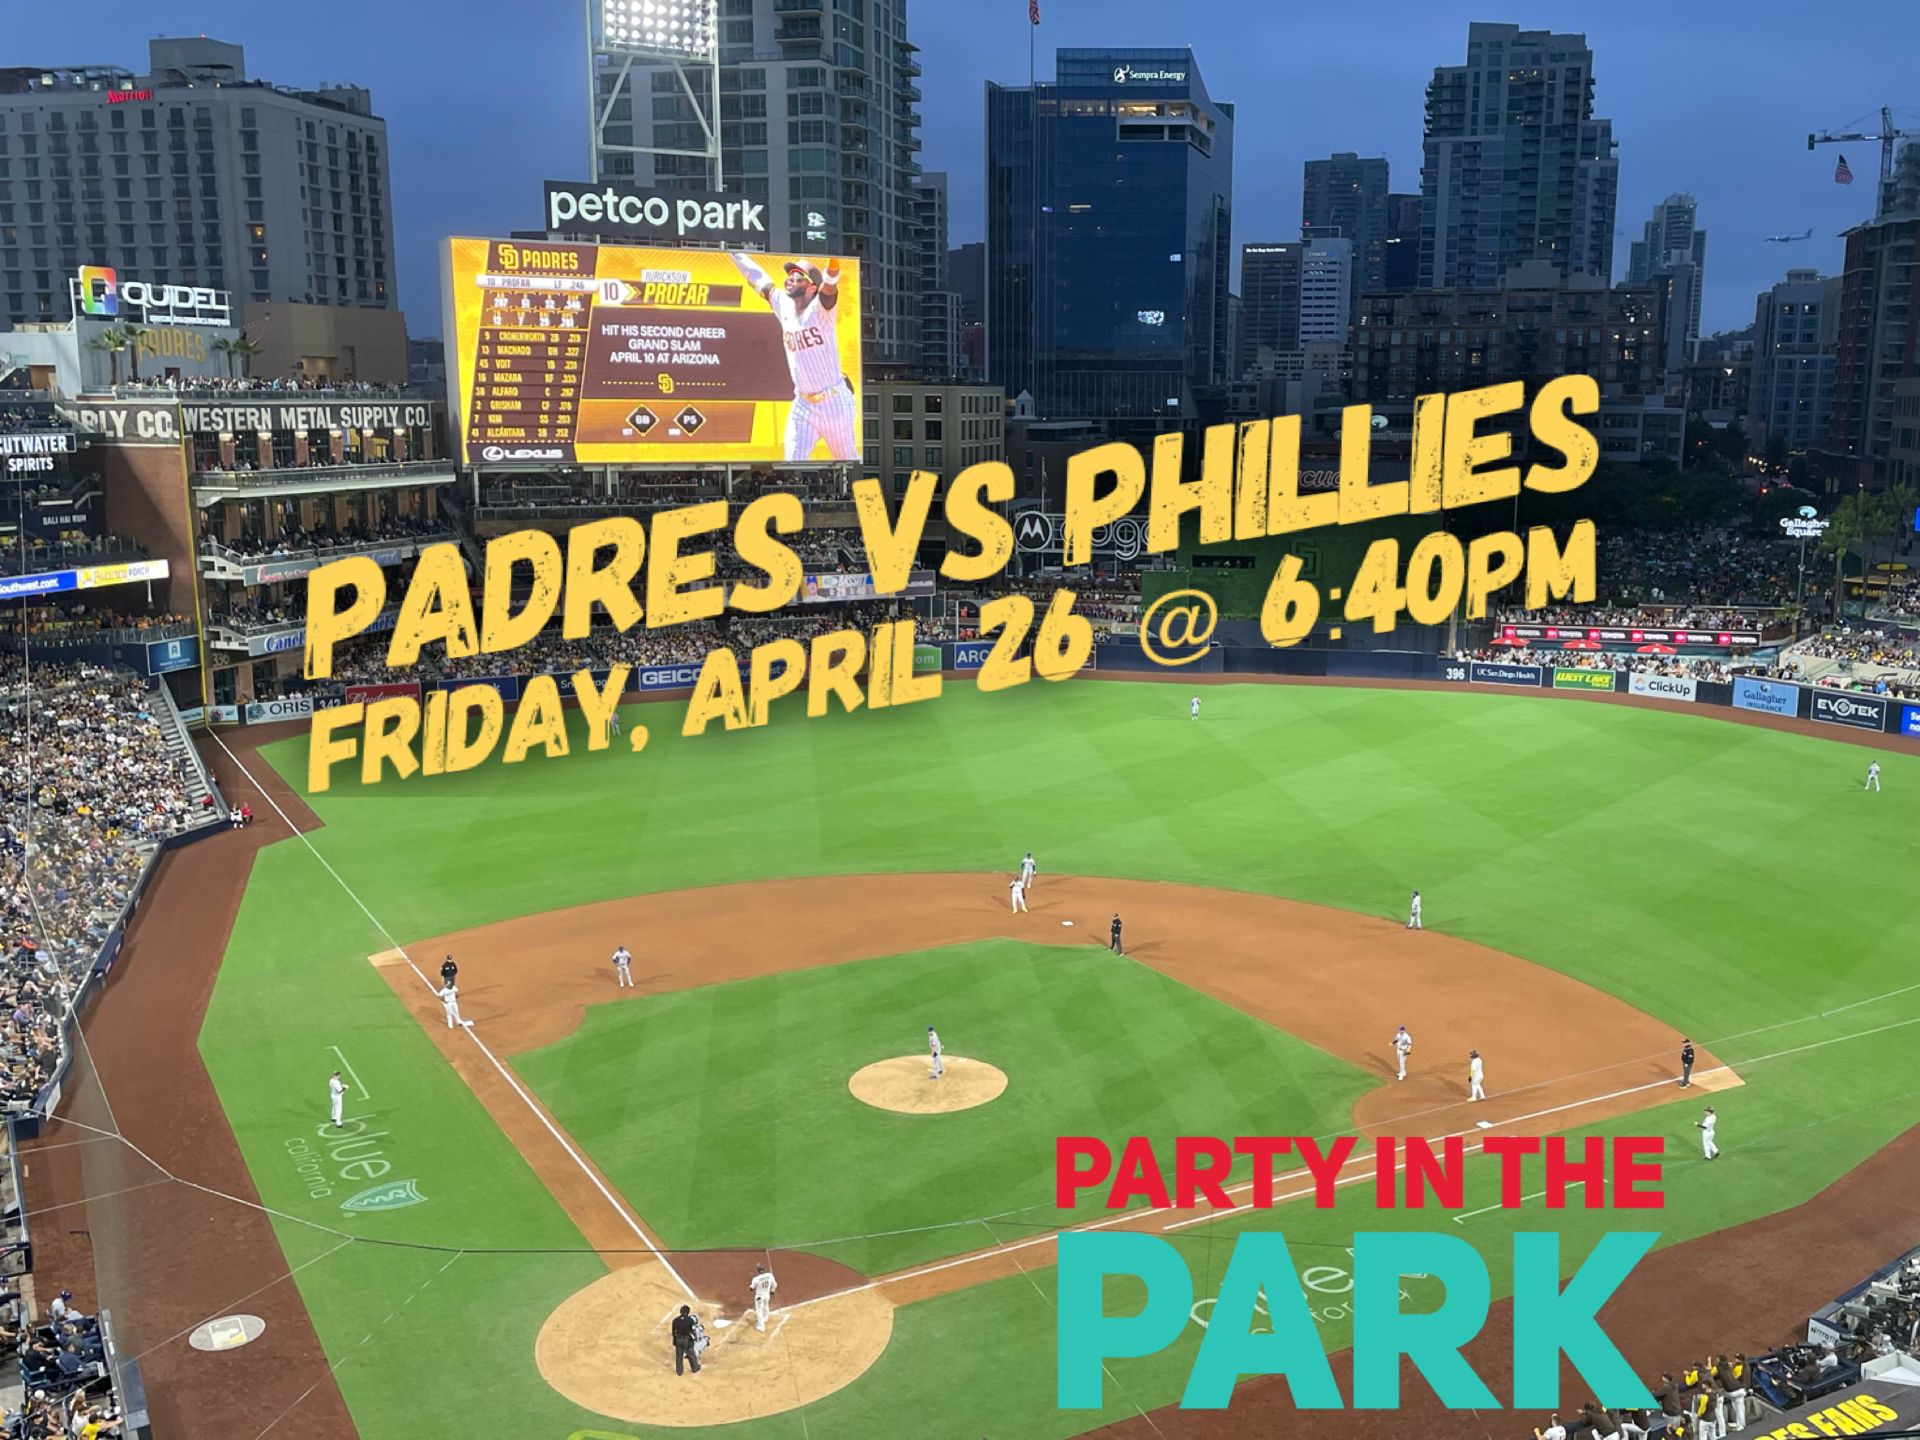 Padres vs Phillies MLB Baseball Tickets - Friday, April 26, 6:40pm